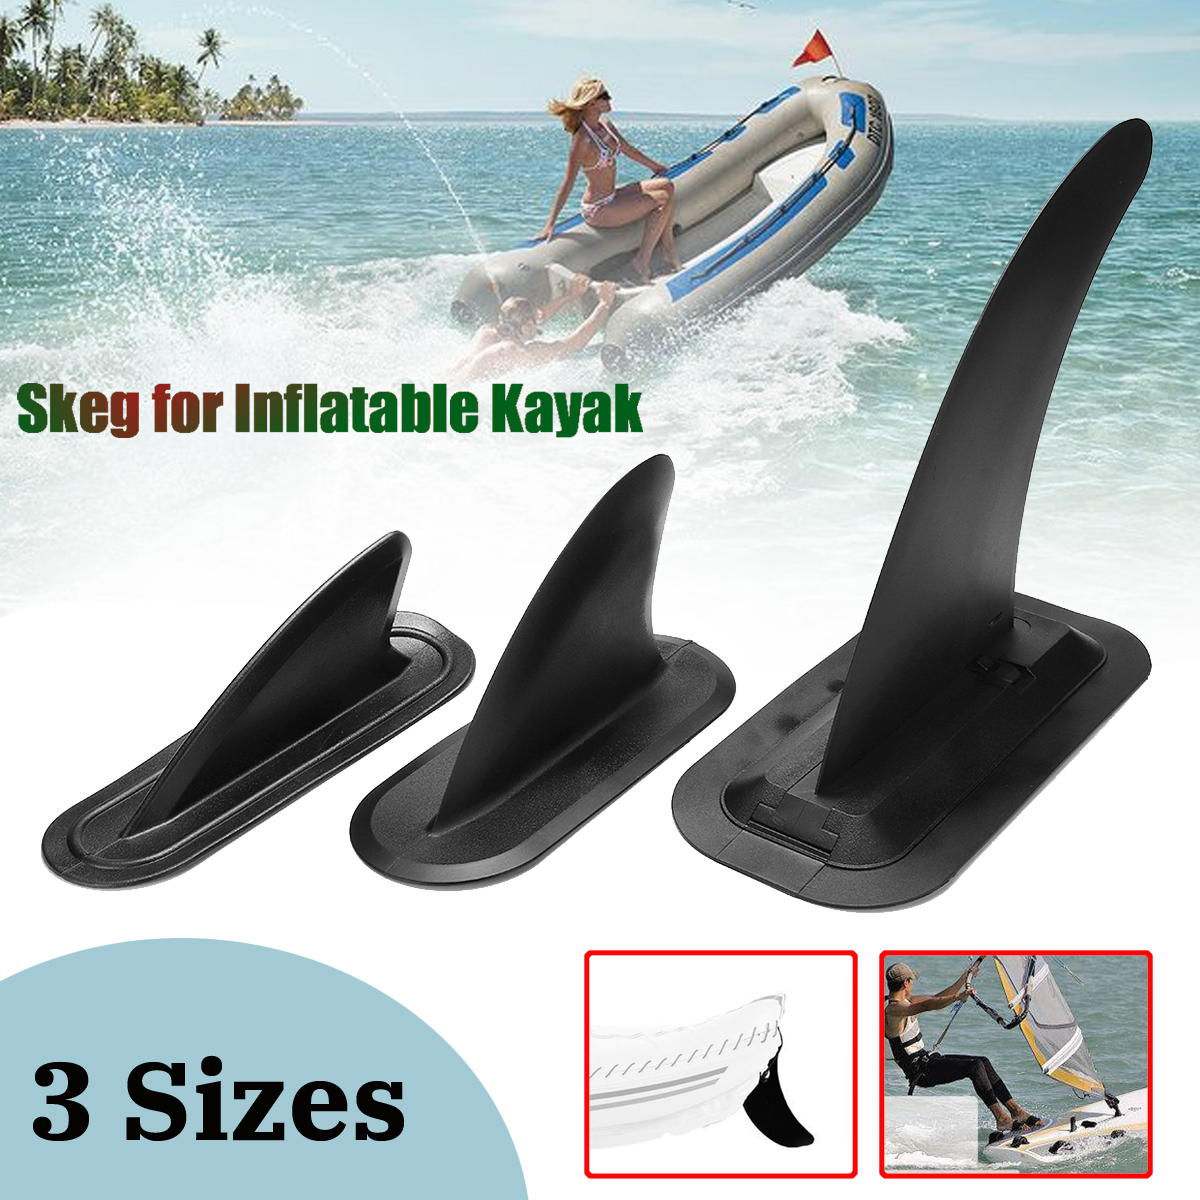 3 Sizes Kayak Skeg Tracking Fin Spare For Inflatable Kayak Canoe Boat Dinghy 